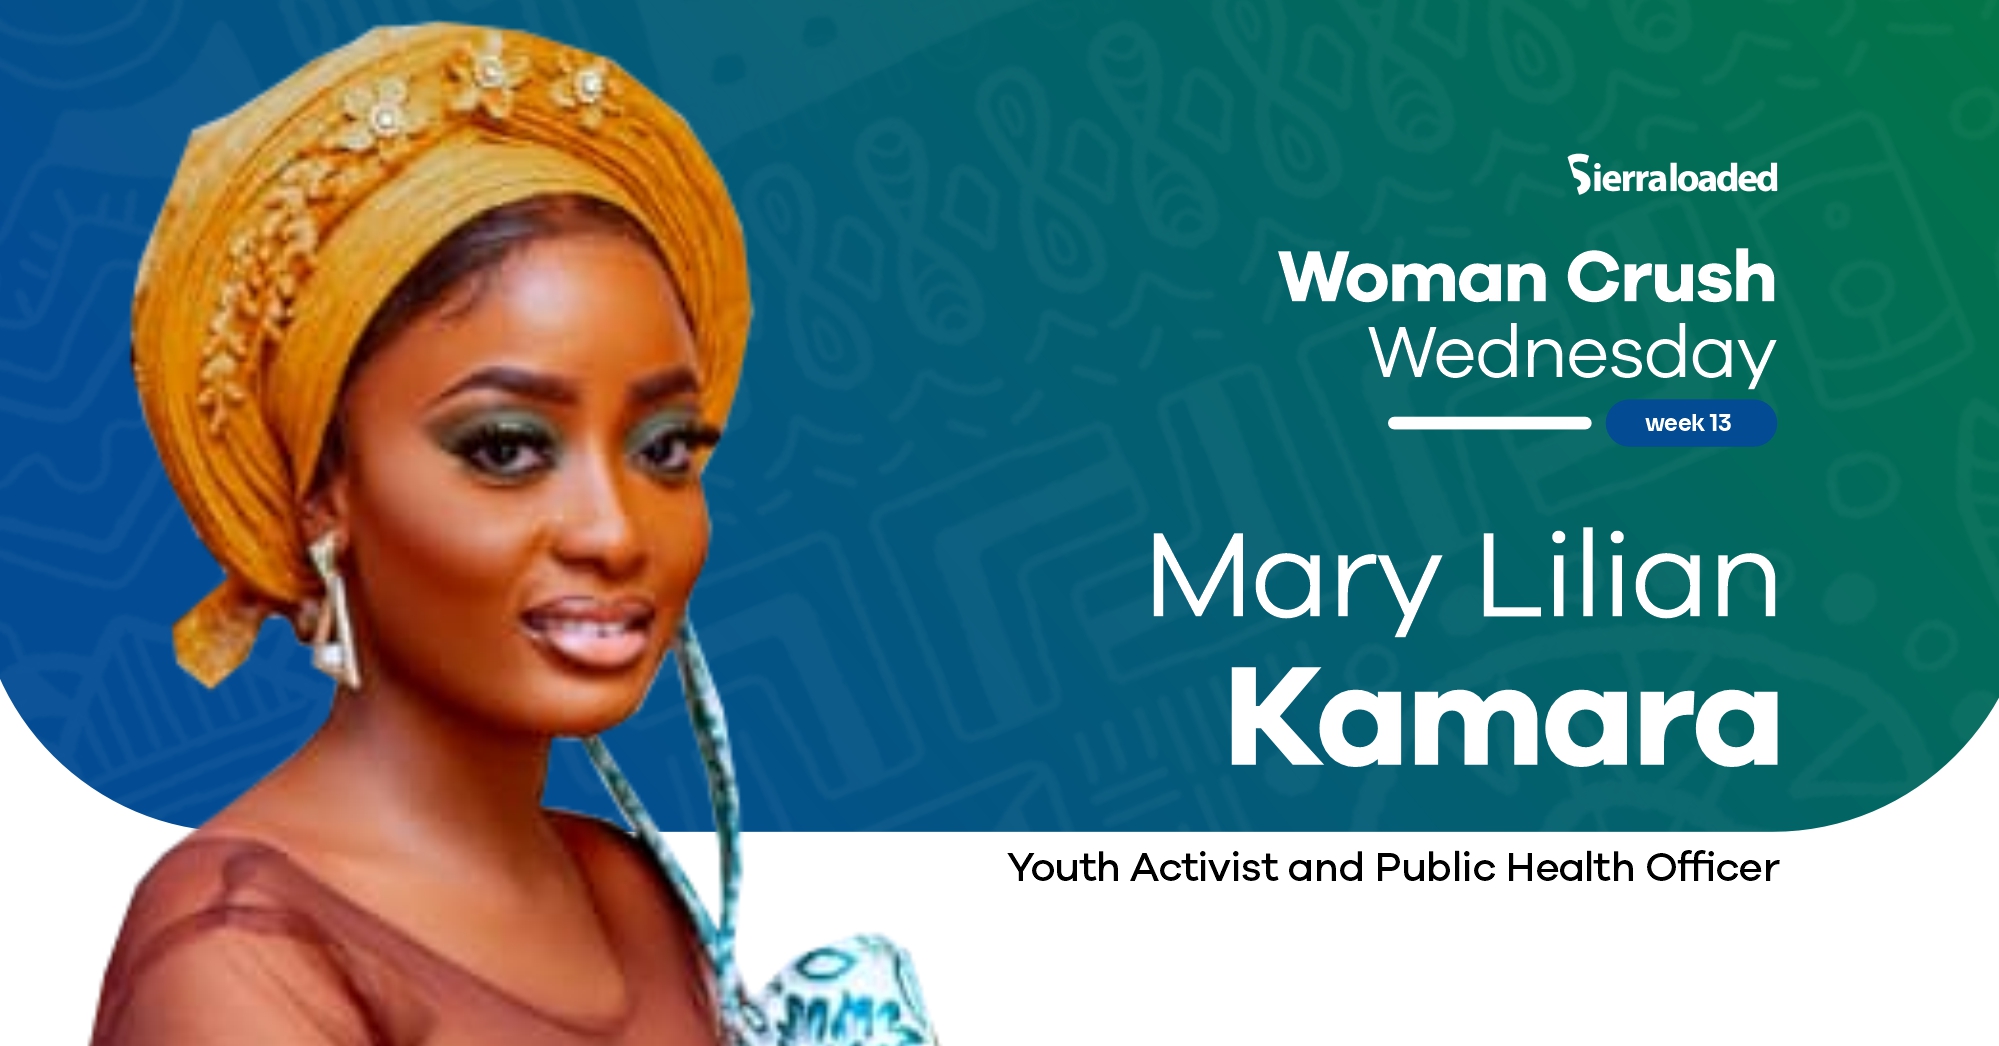 Meet Mary Lilian Kamara, Sierraloaded Woman Crush Wednesday